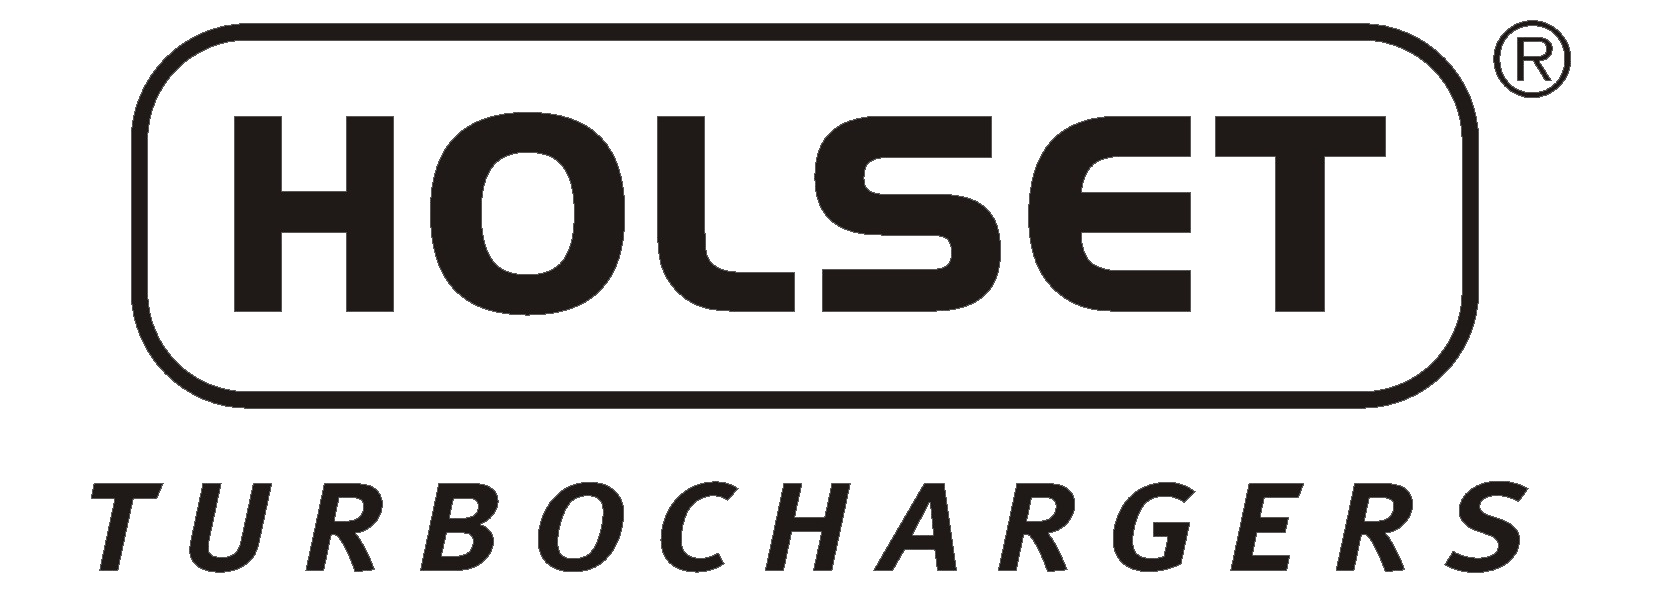 holset-logo